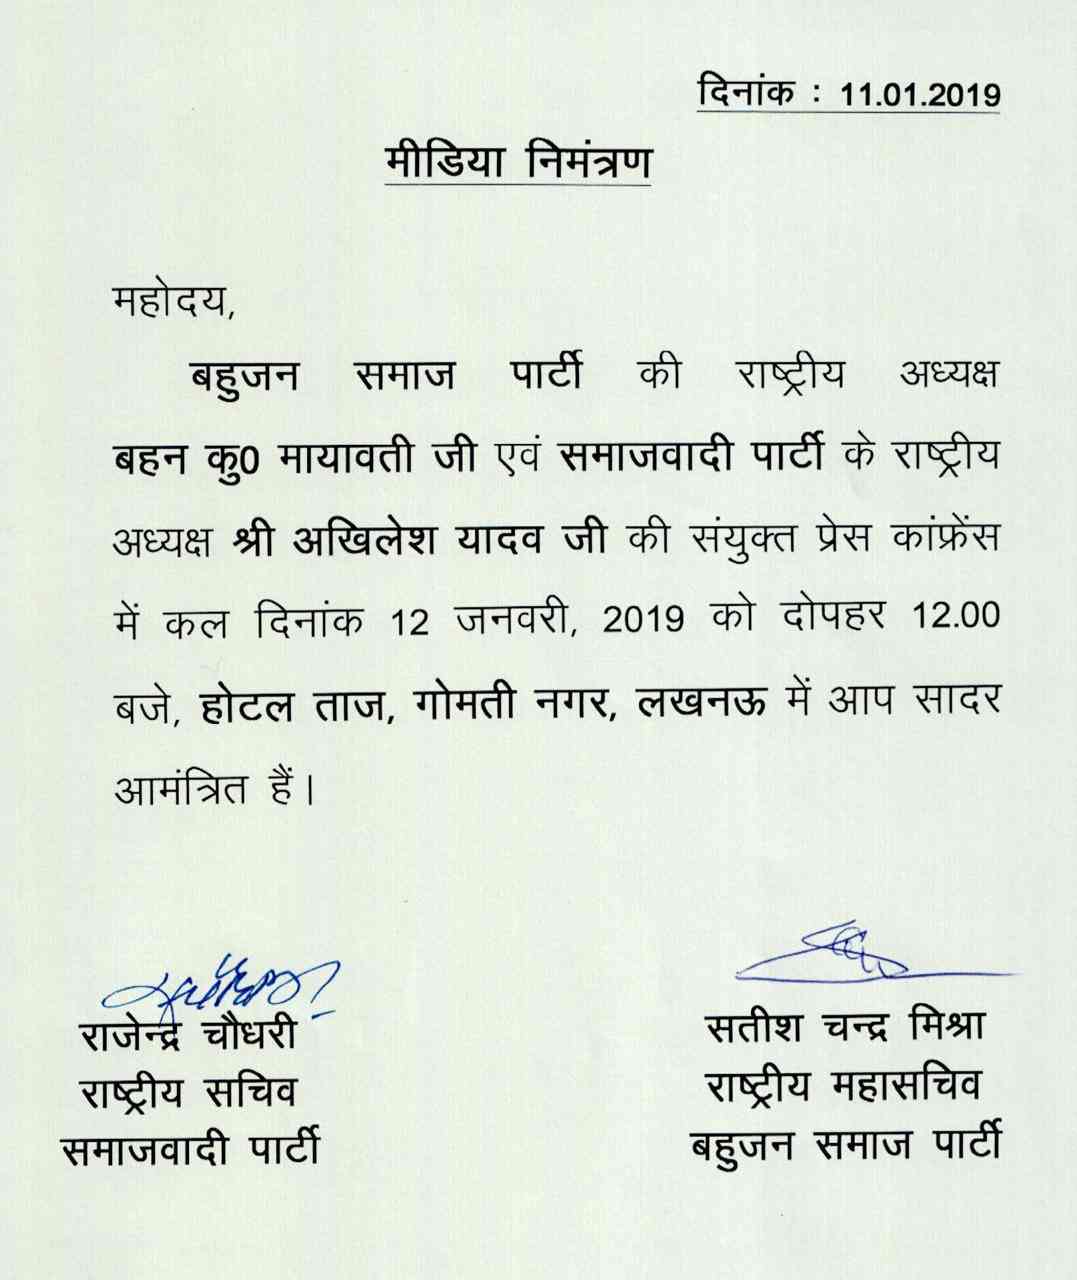 Mayawati Akhilesh yadv press briefing alliance for 2019 elections - Satya Hindi